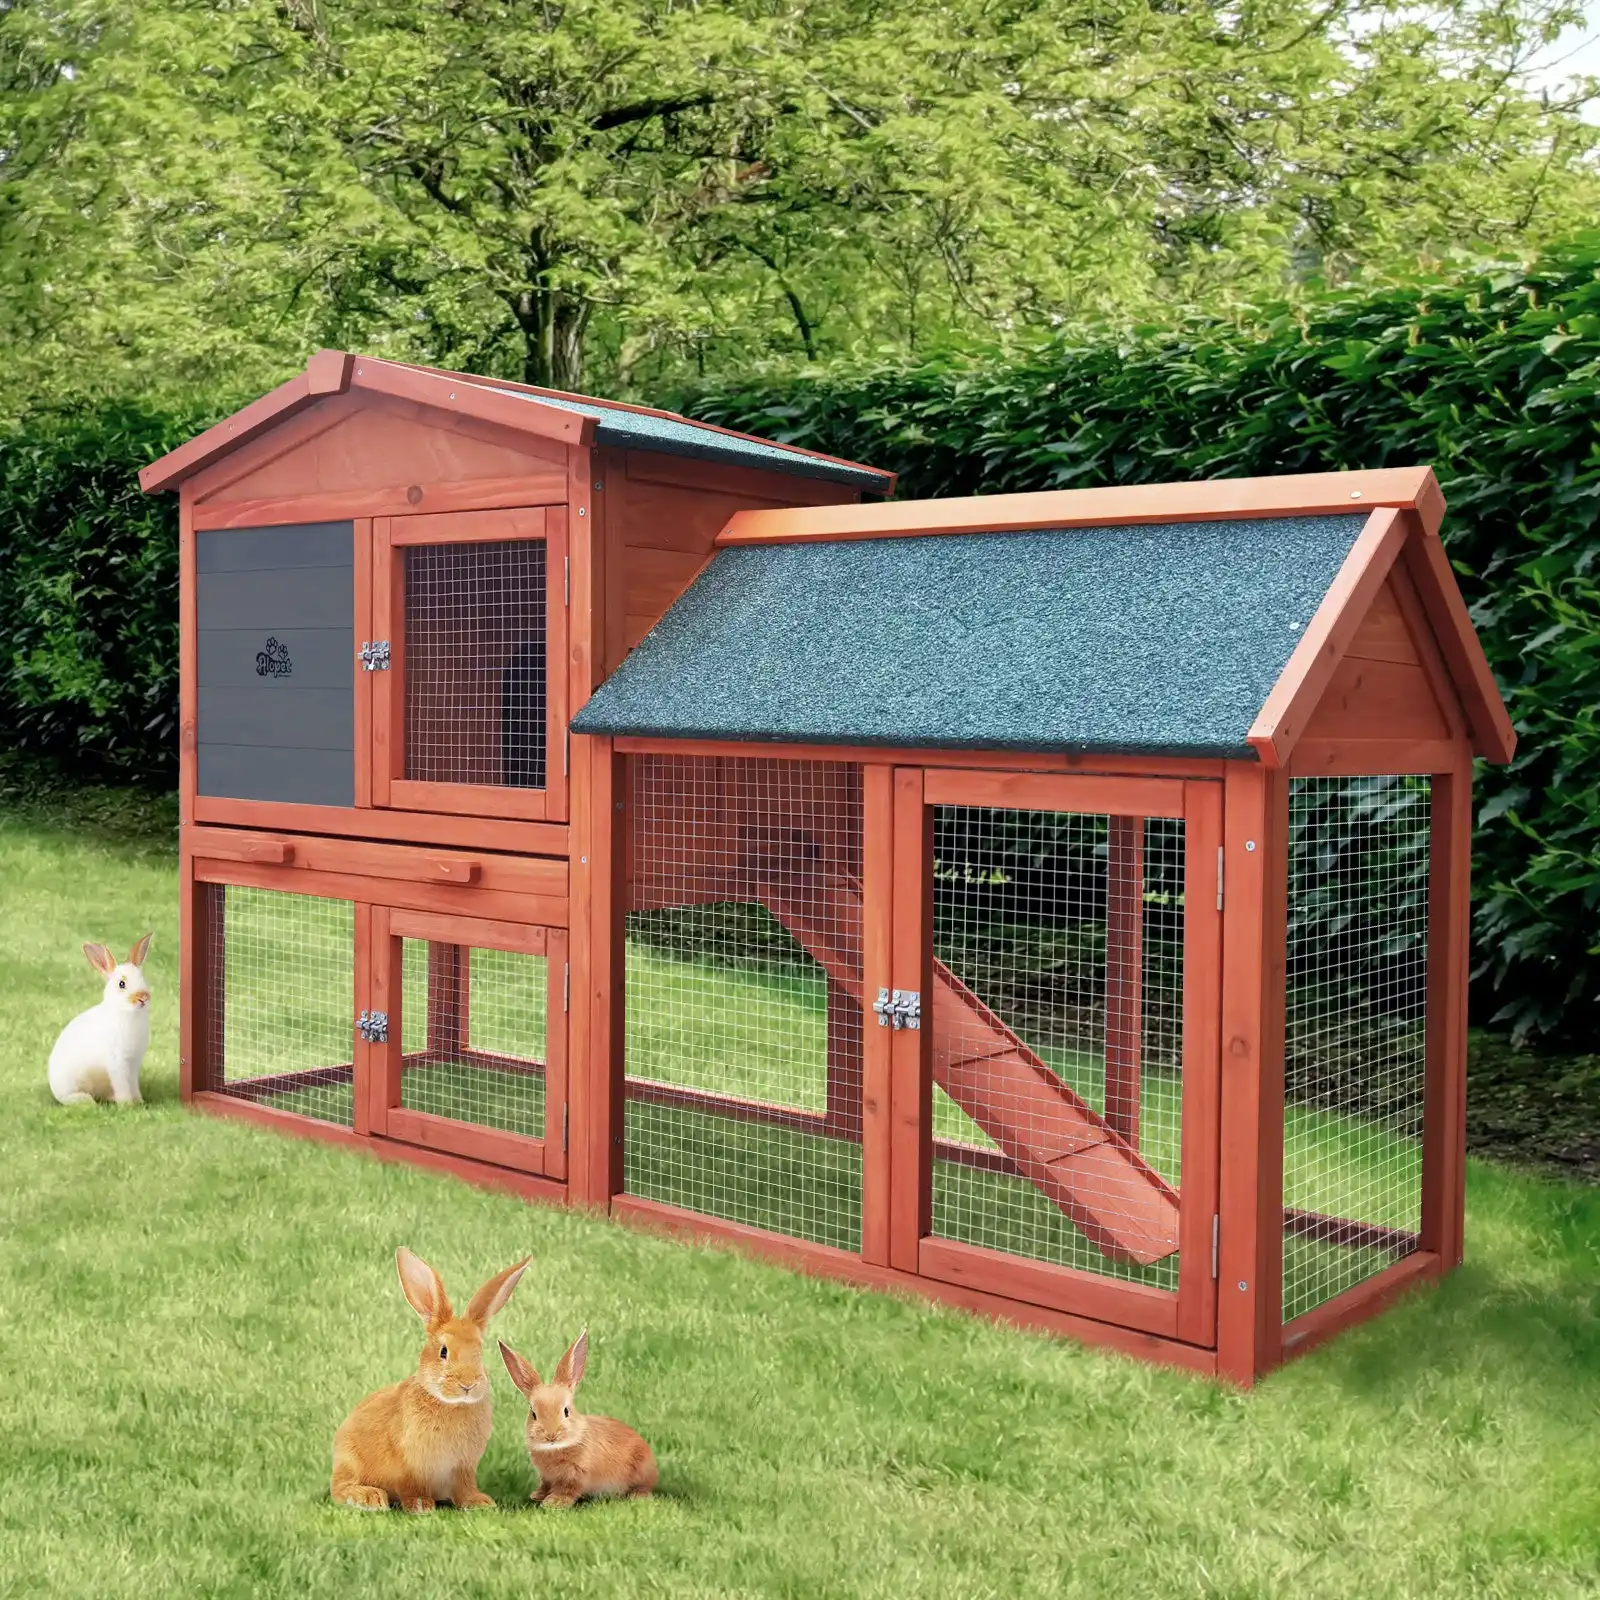 Alopet Rabbit Hutch Chicken Coop Bunny House Run Cage Wooden Outdoor Pet Hutch 135CM